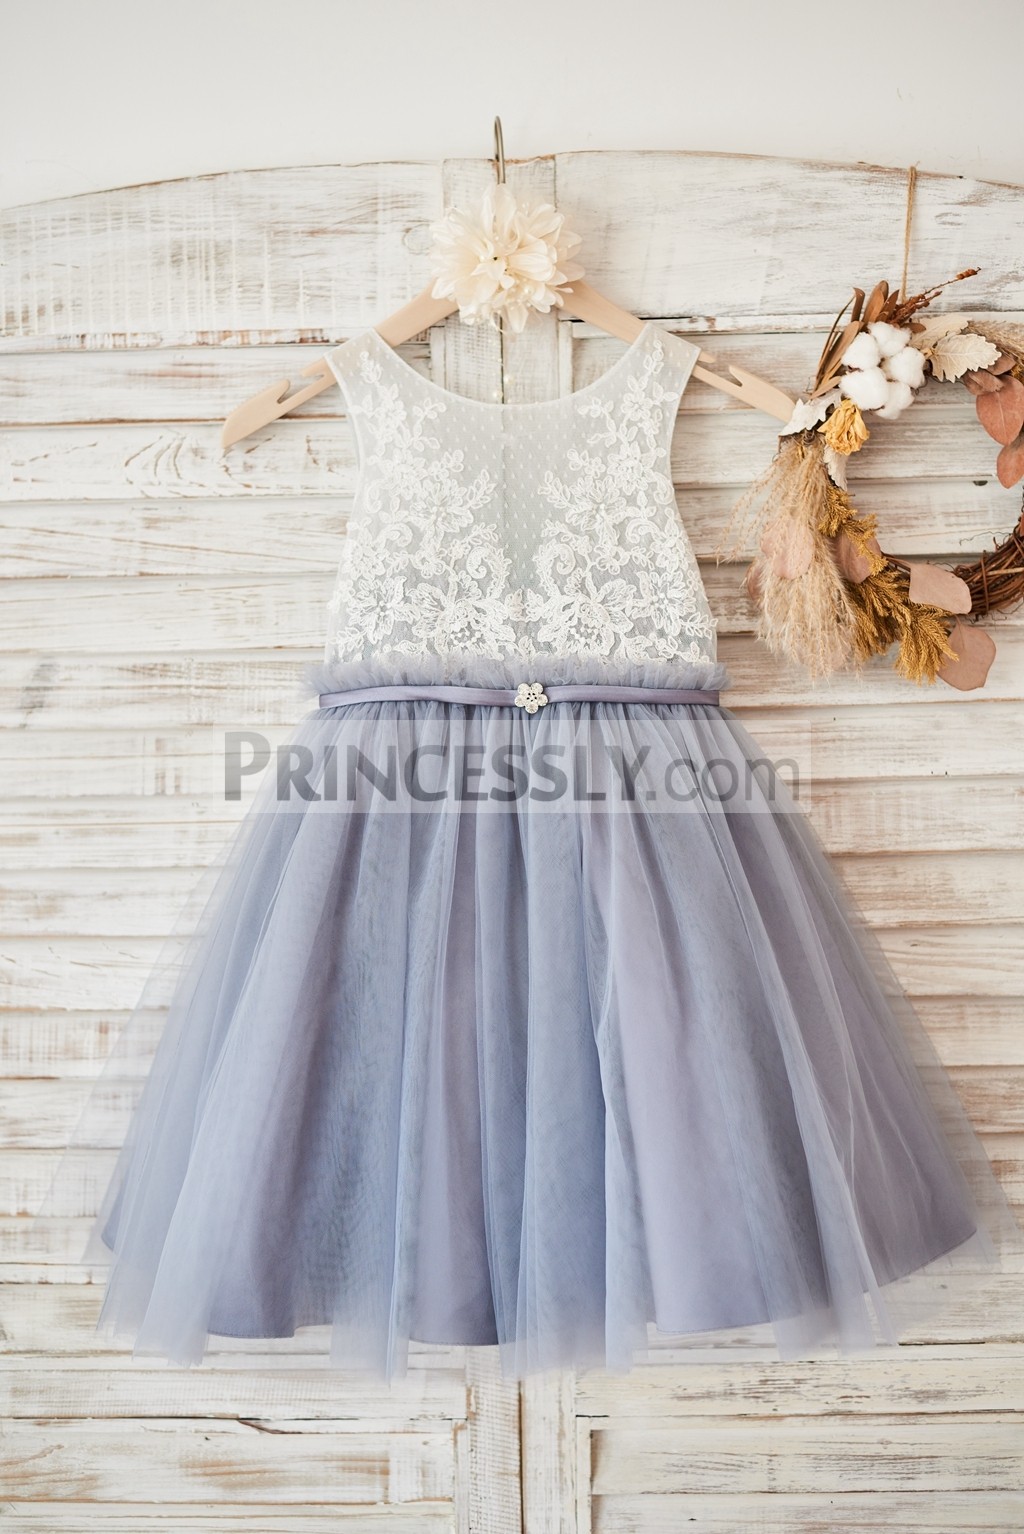 Princessly.com-K1003580-Ivory Lace Gray Tulle Sheer Back Wedding Flower Girl Dress with Belt-31